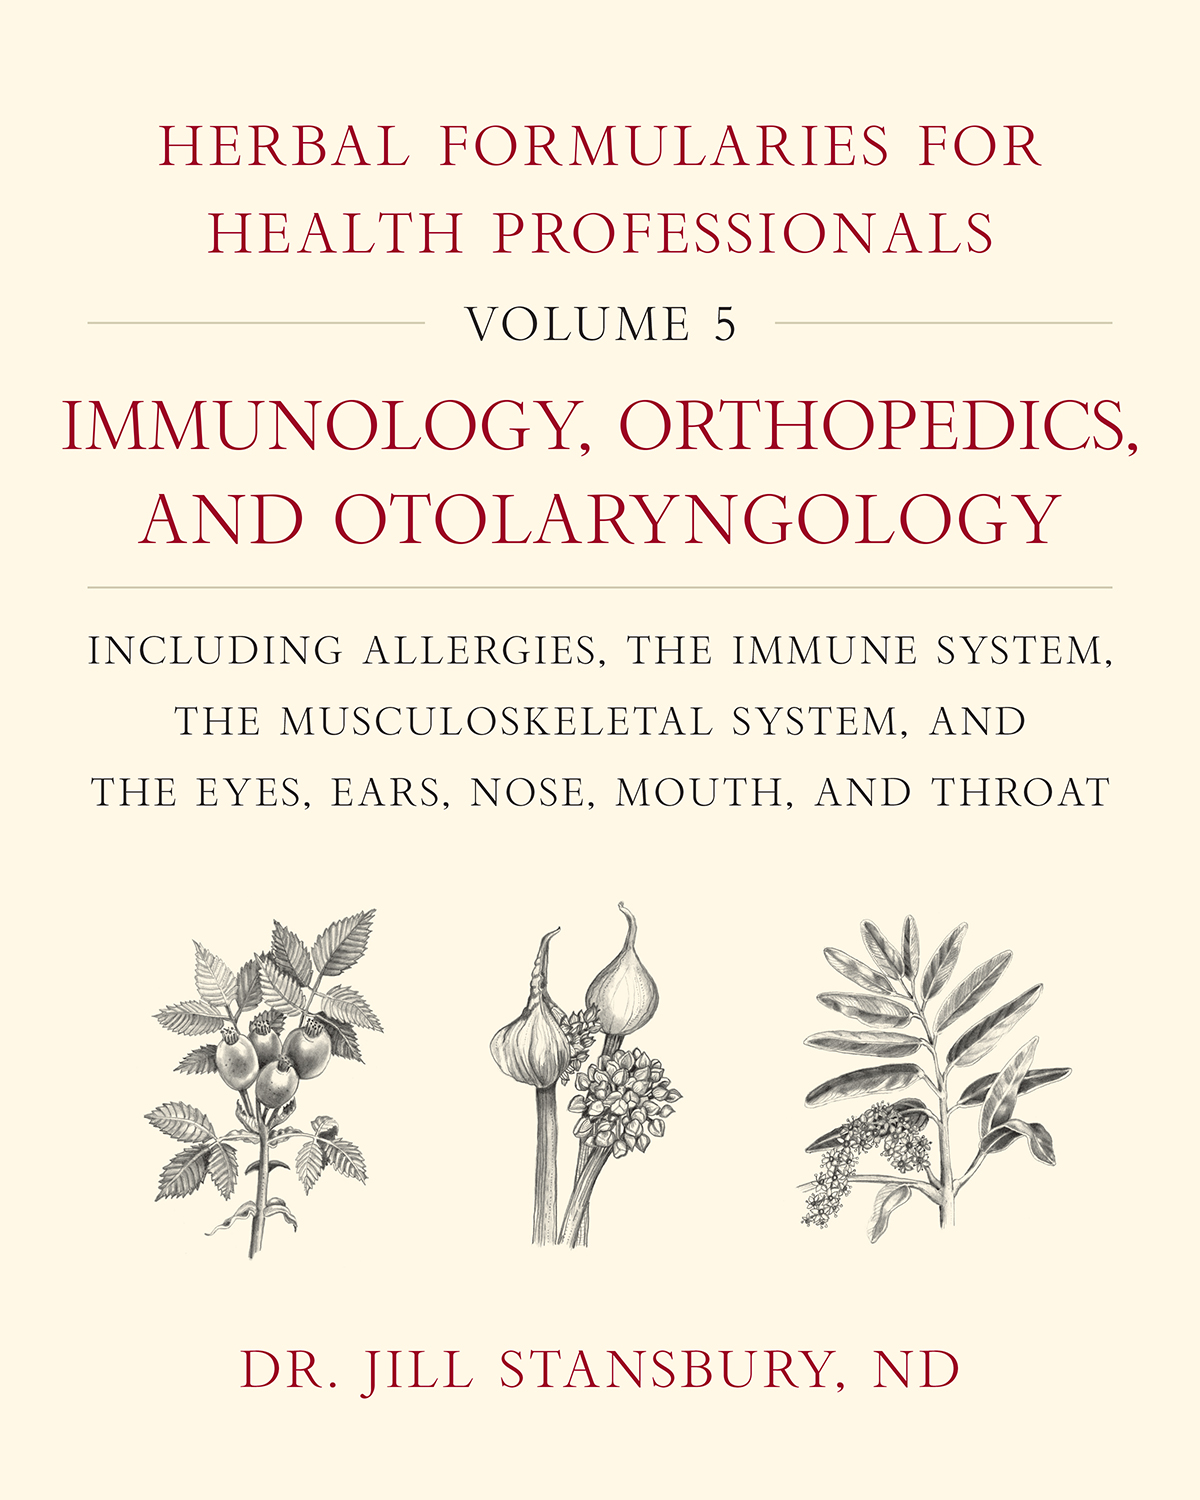 Herbal Formularies for Health Professionals, Volume 5:  Immunology, Orthopedics, and Otolaryngology